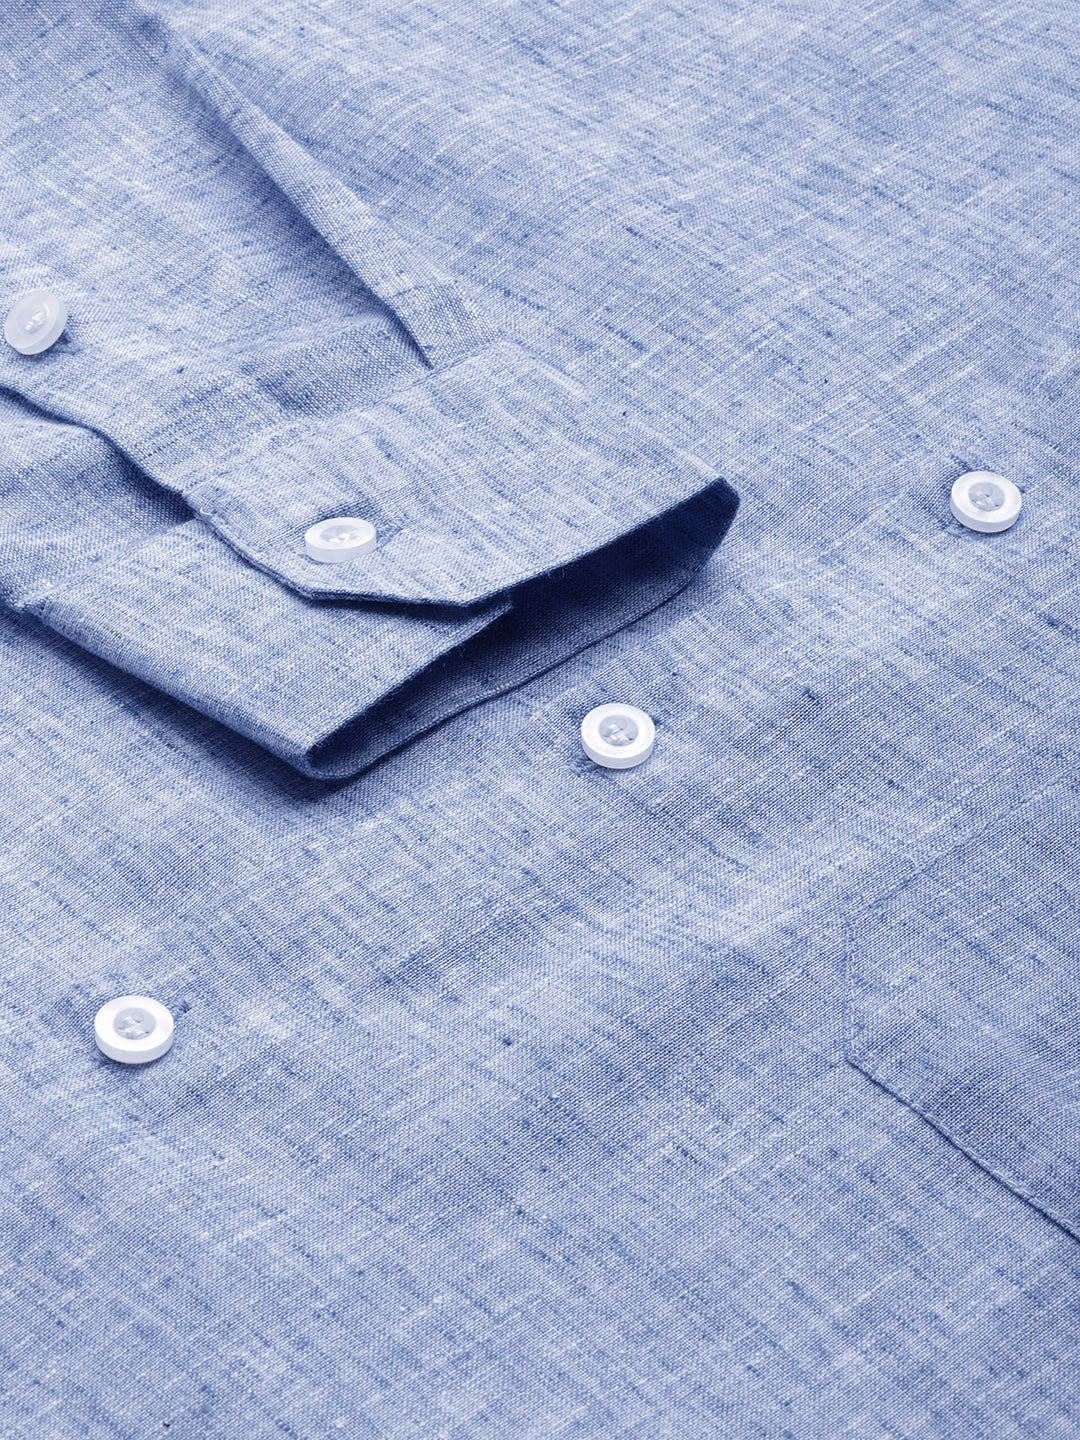 Men's Blue Solid Cotton Formal Shirt ( SF 782Blue ) - Jainish